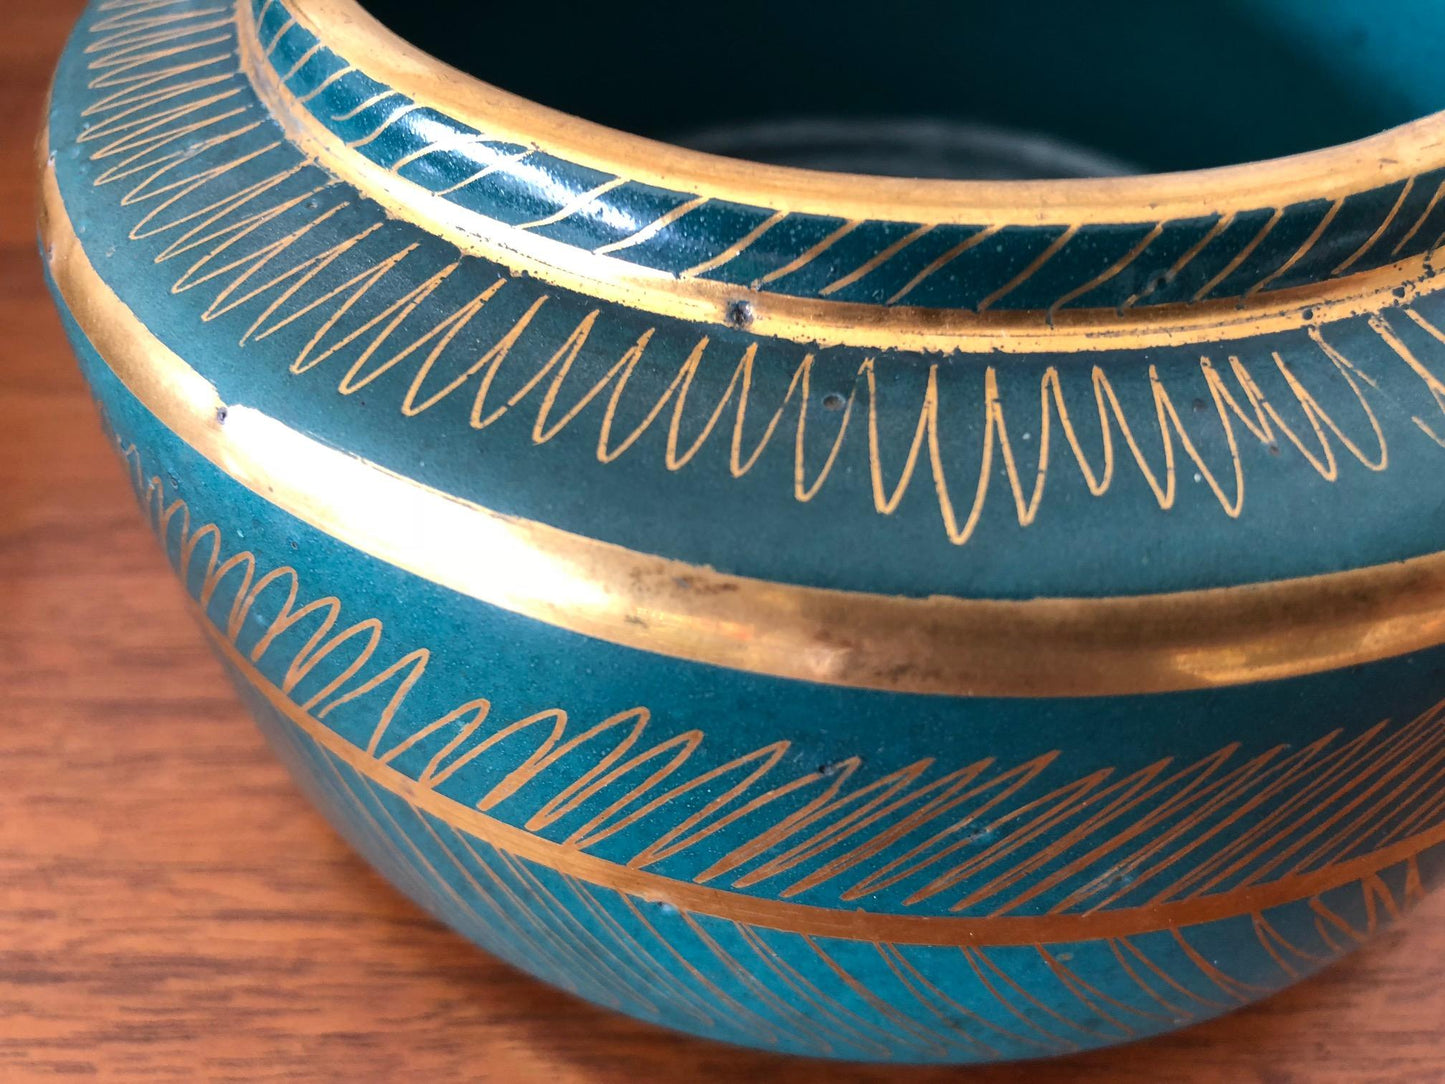 Waylande Gregory Ceramic Jar with Sgraffito Decoration